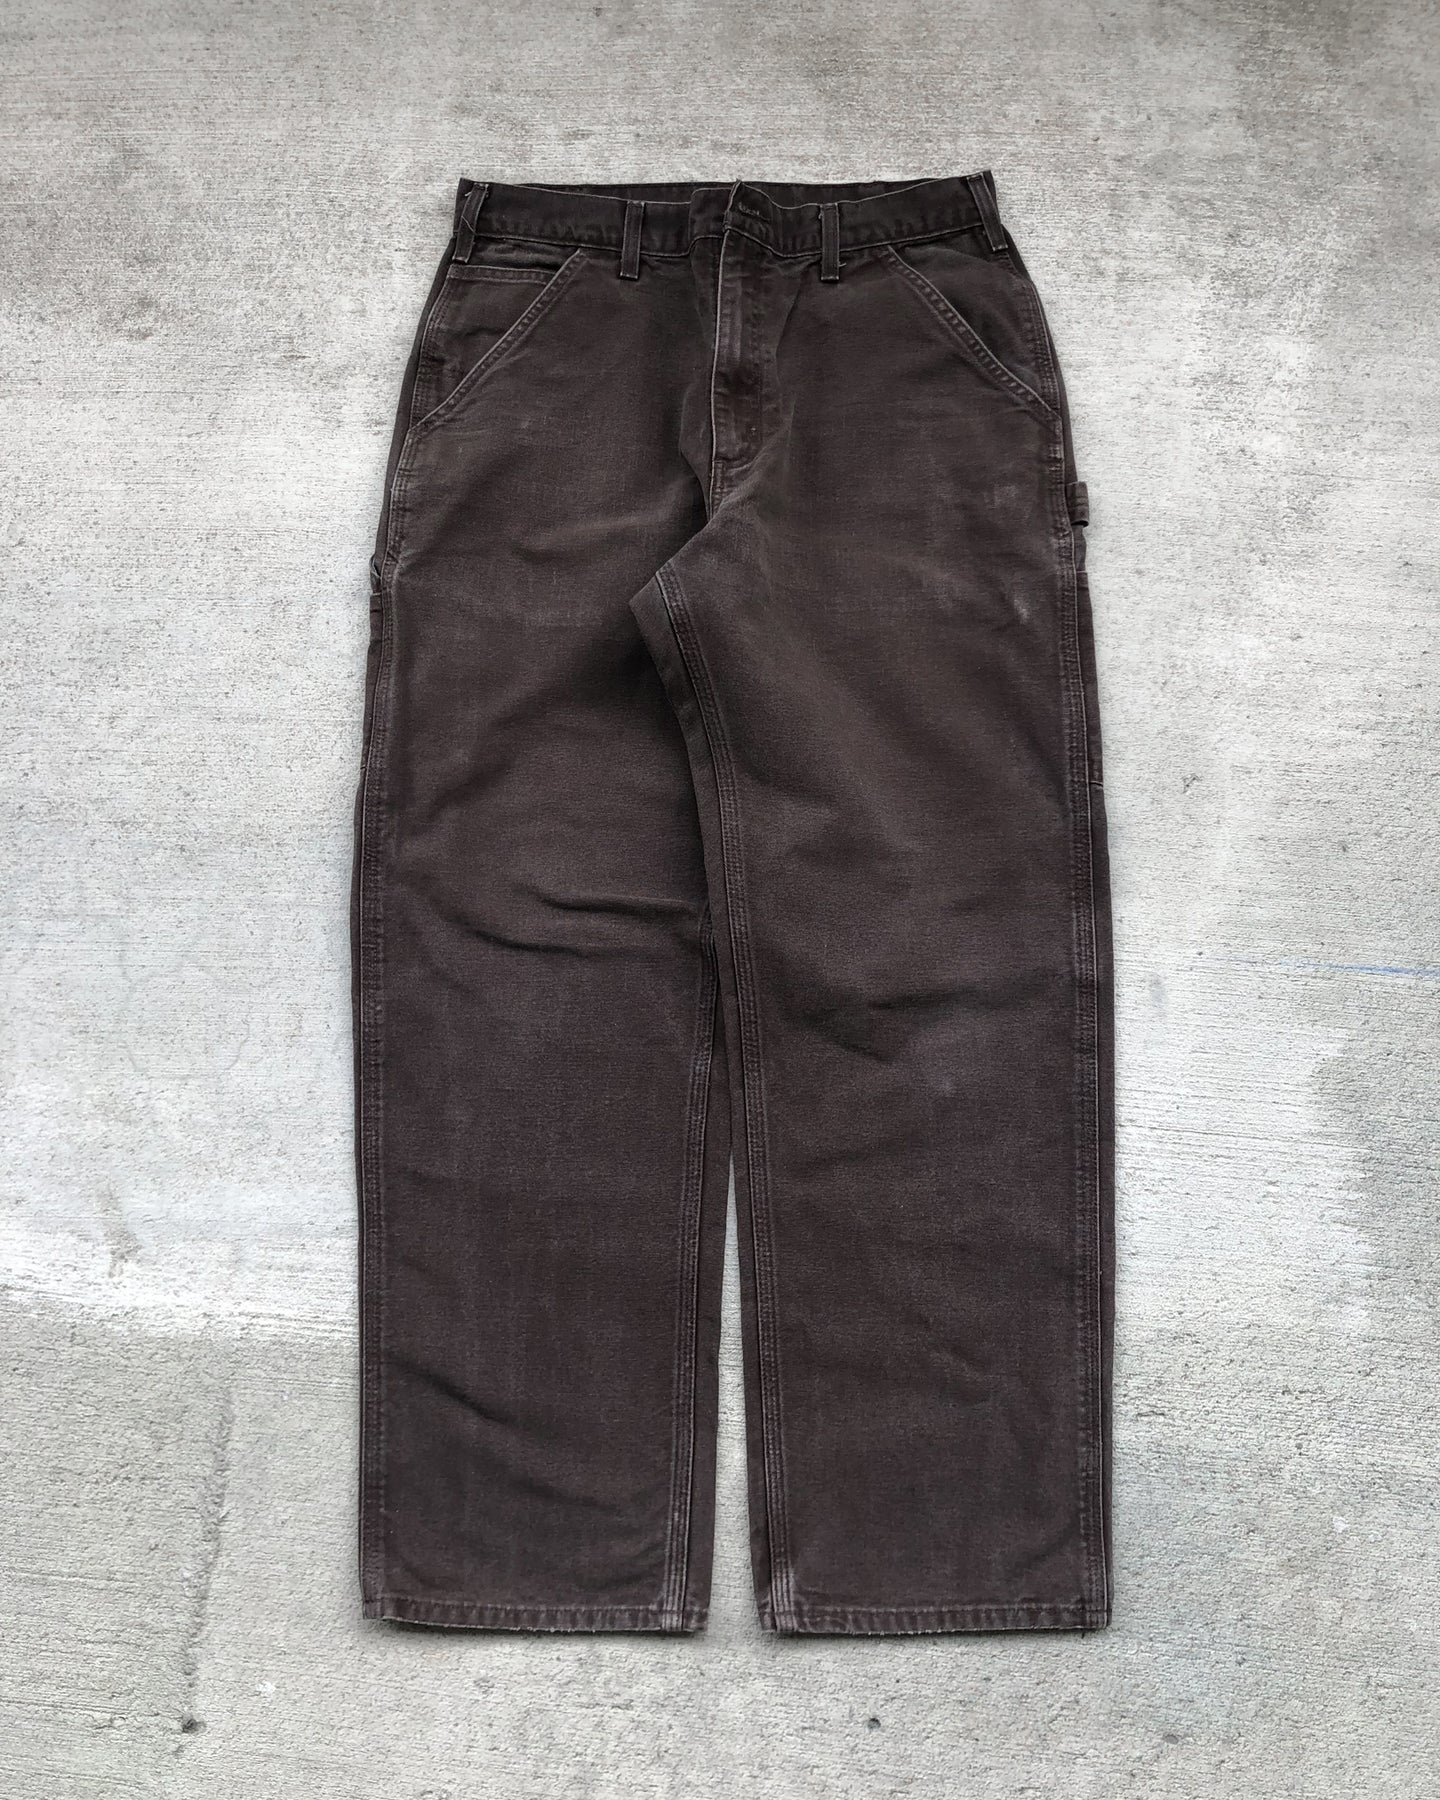 Carhartt Chocolate Brown Carpenter Pants - Size 32 x 30